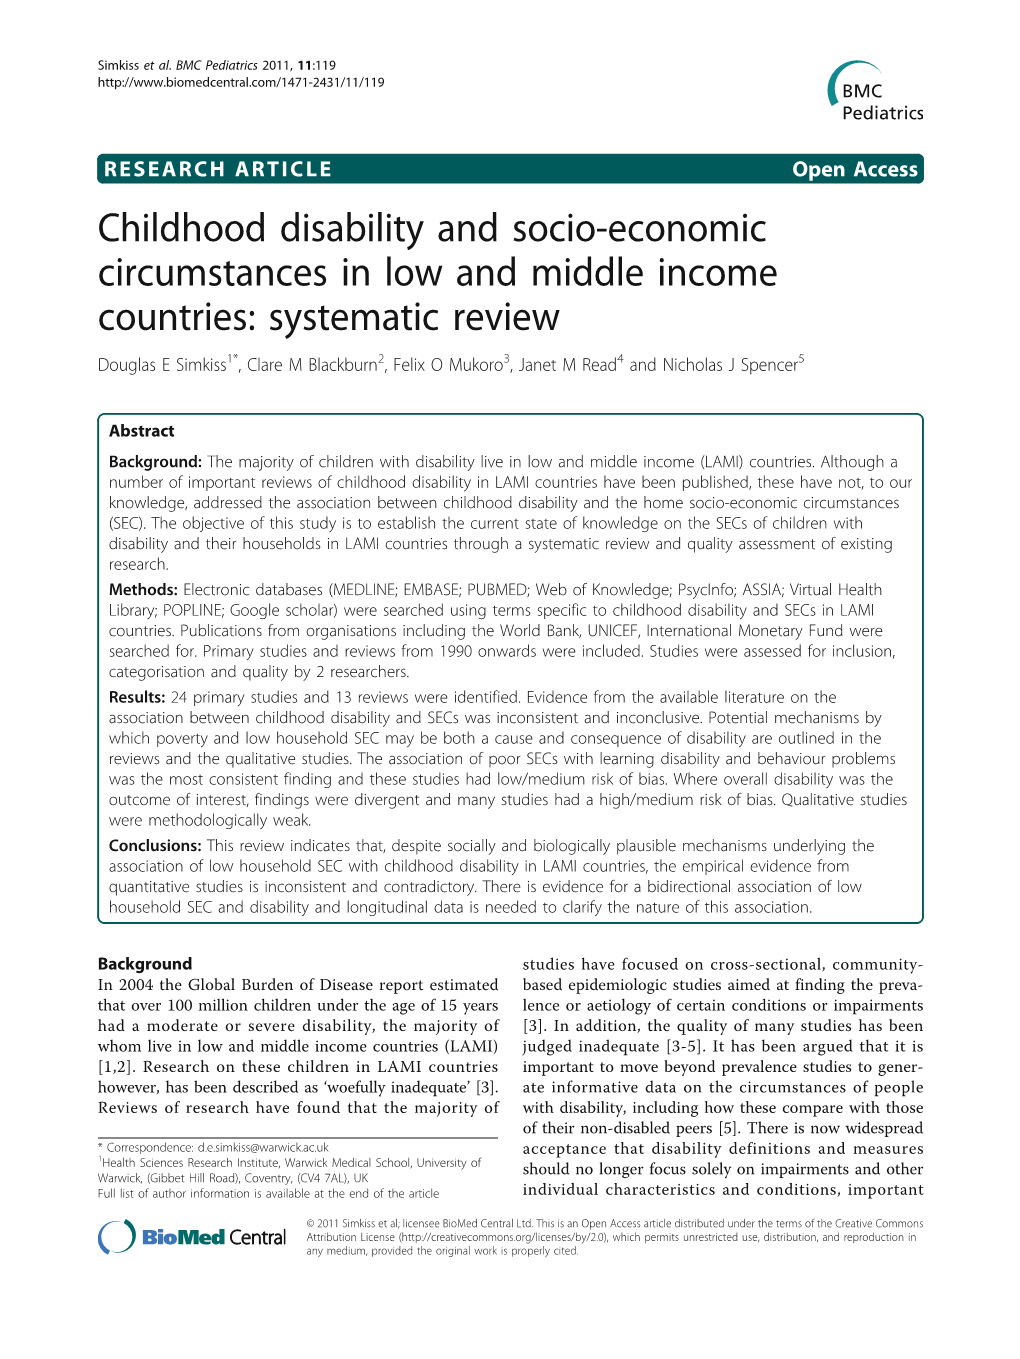 Childhood Disability and Socio-Economic